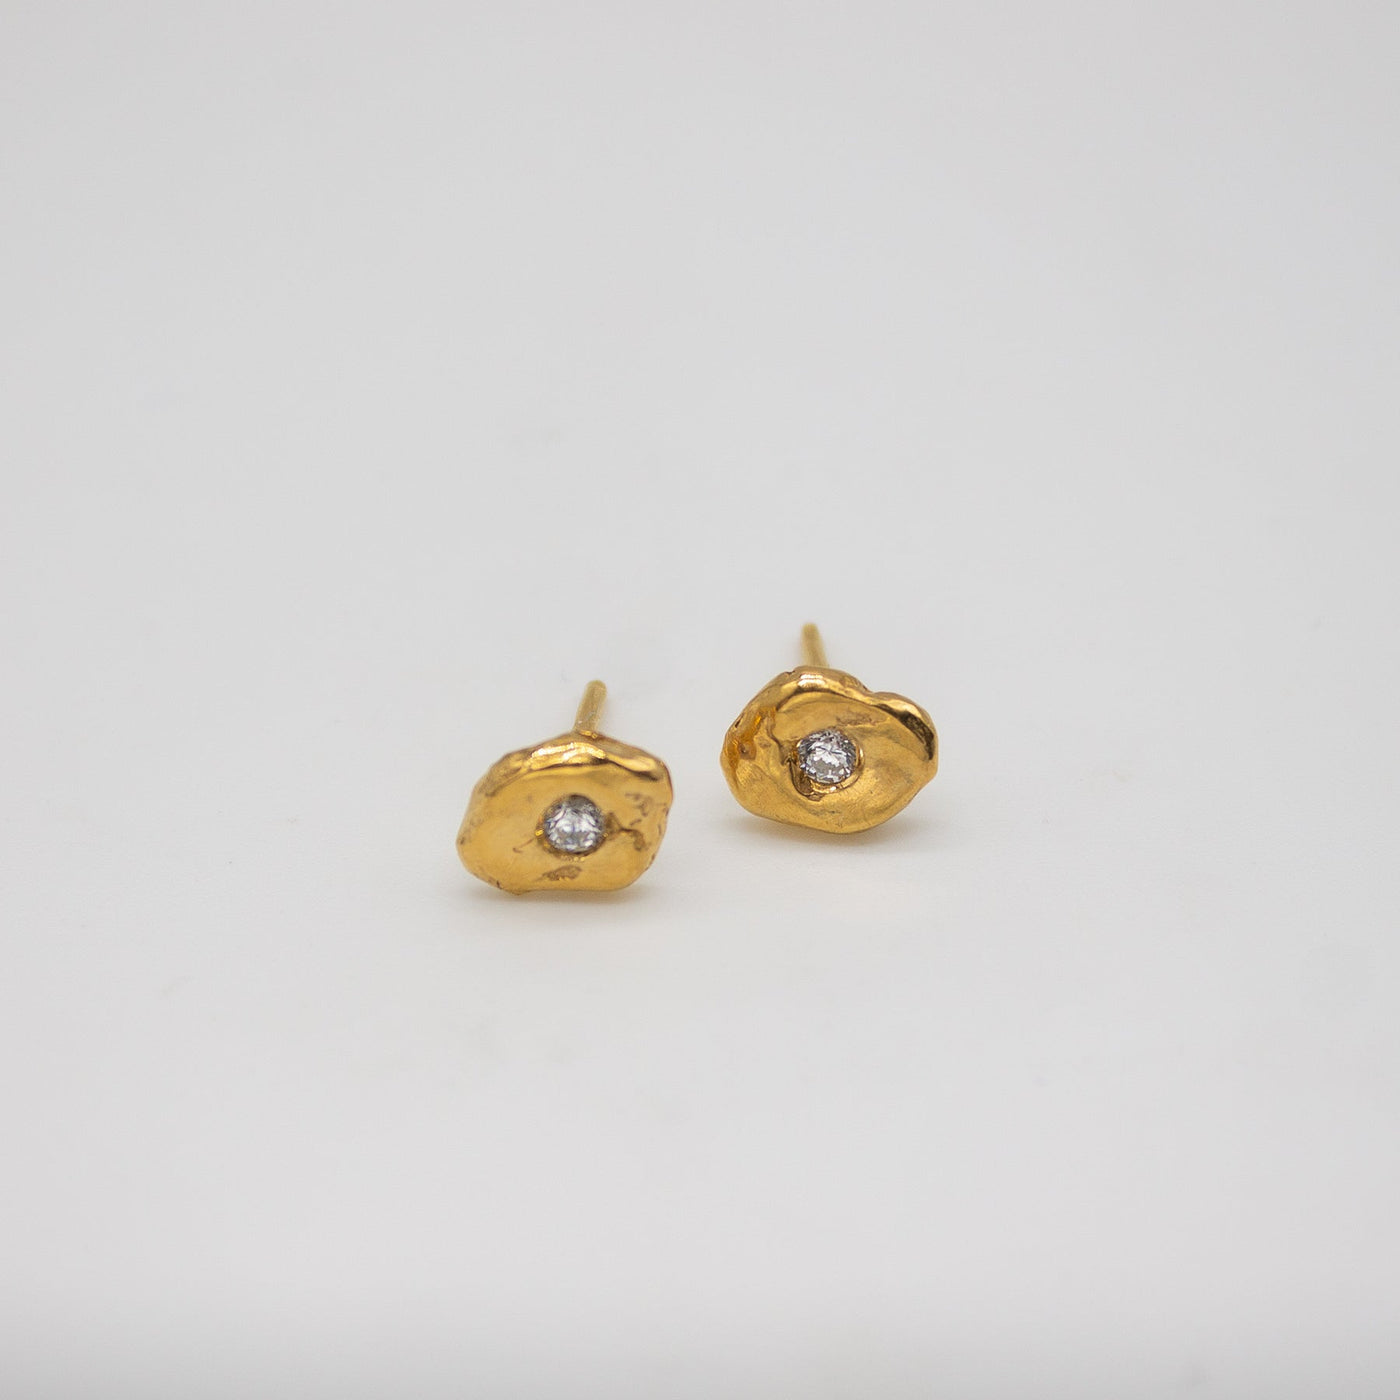 Jewelry set // LÆRDAL earrings x LÆRDAL necklace gold plated 